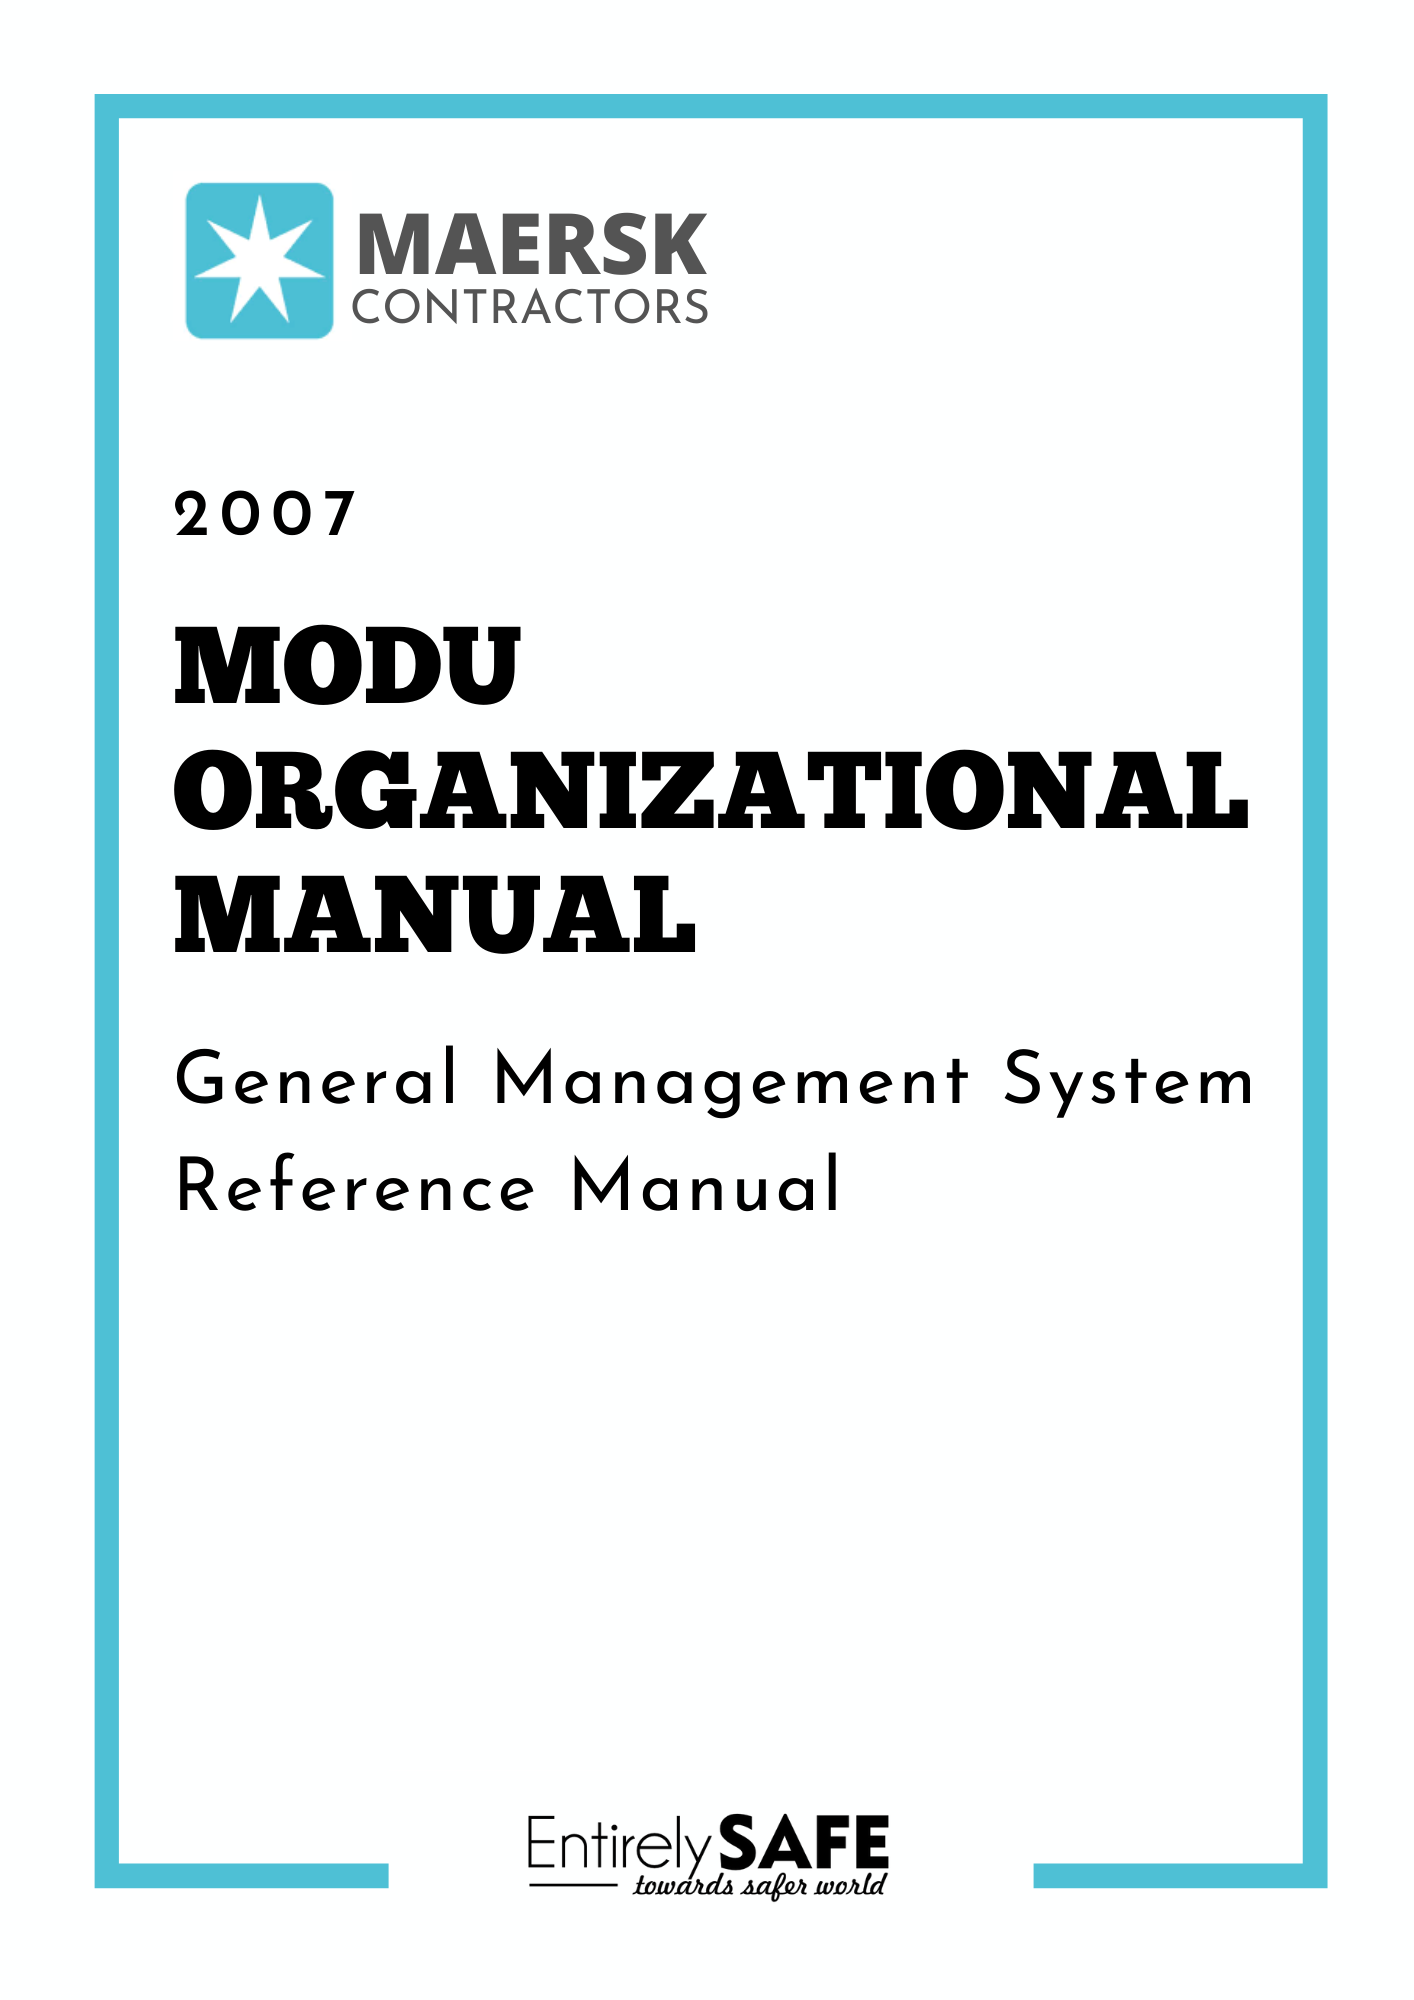 141-Download-FREE-MODU-Organizaional-Manual-Maersk-Contractors.png